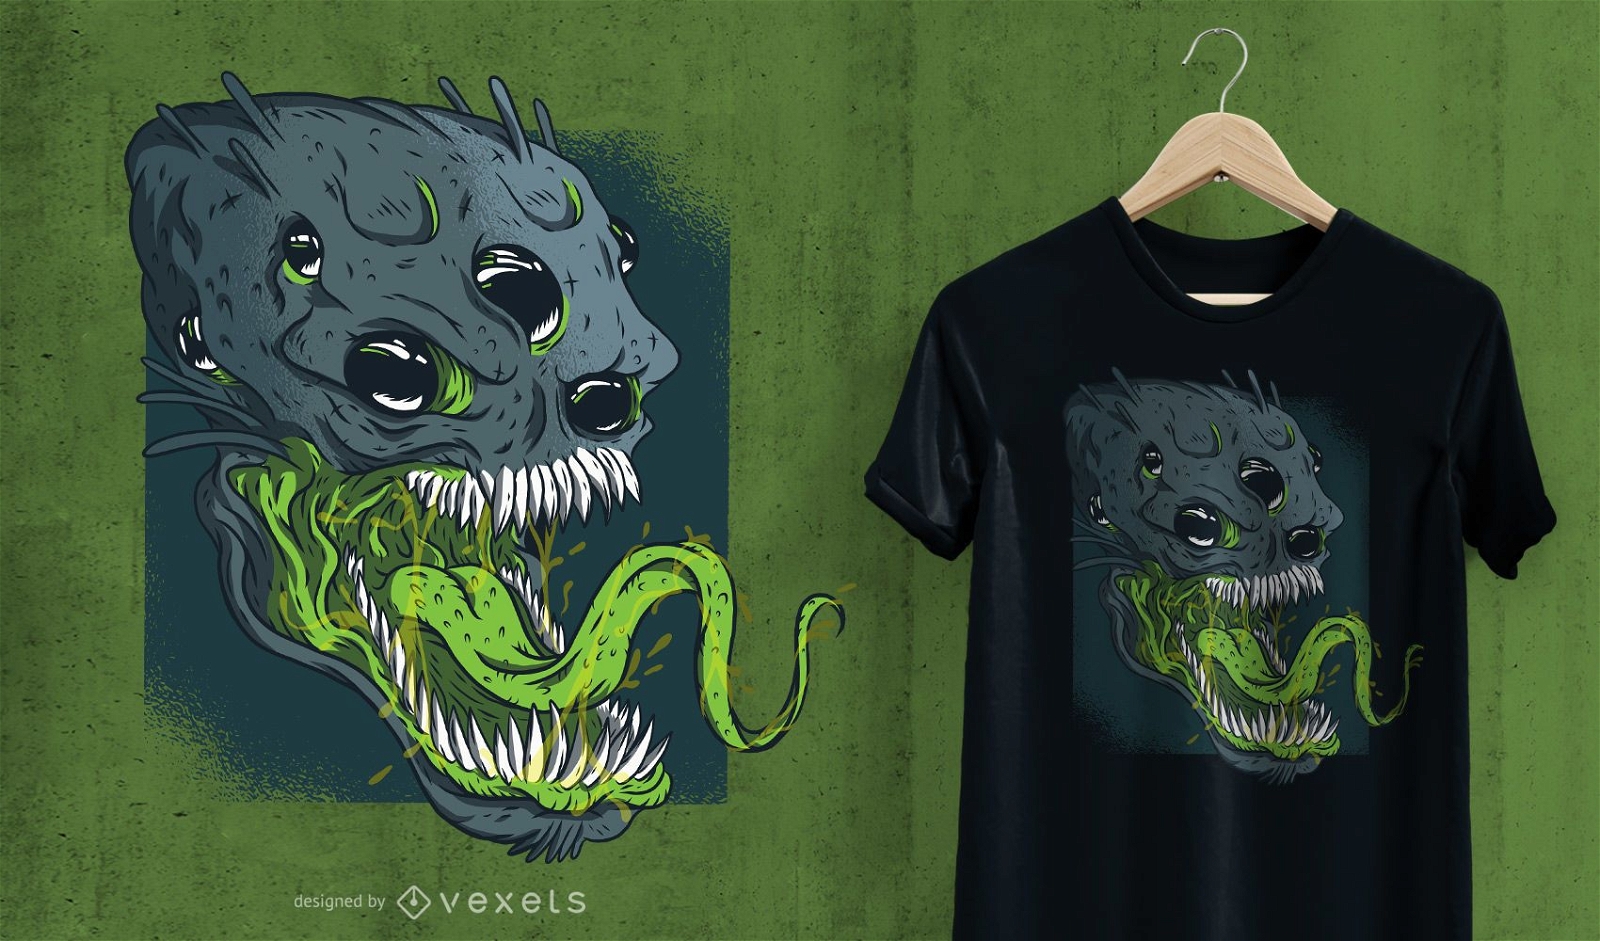 Erschreckender Alien-T-Shirt-Entwurf